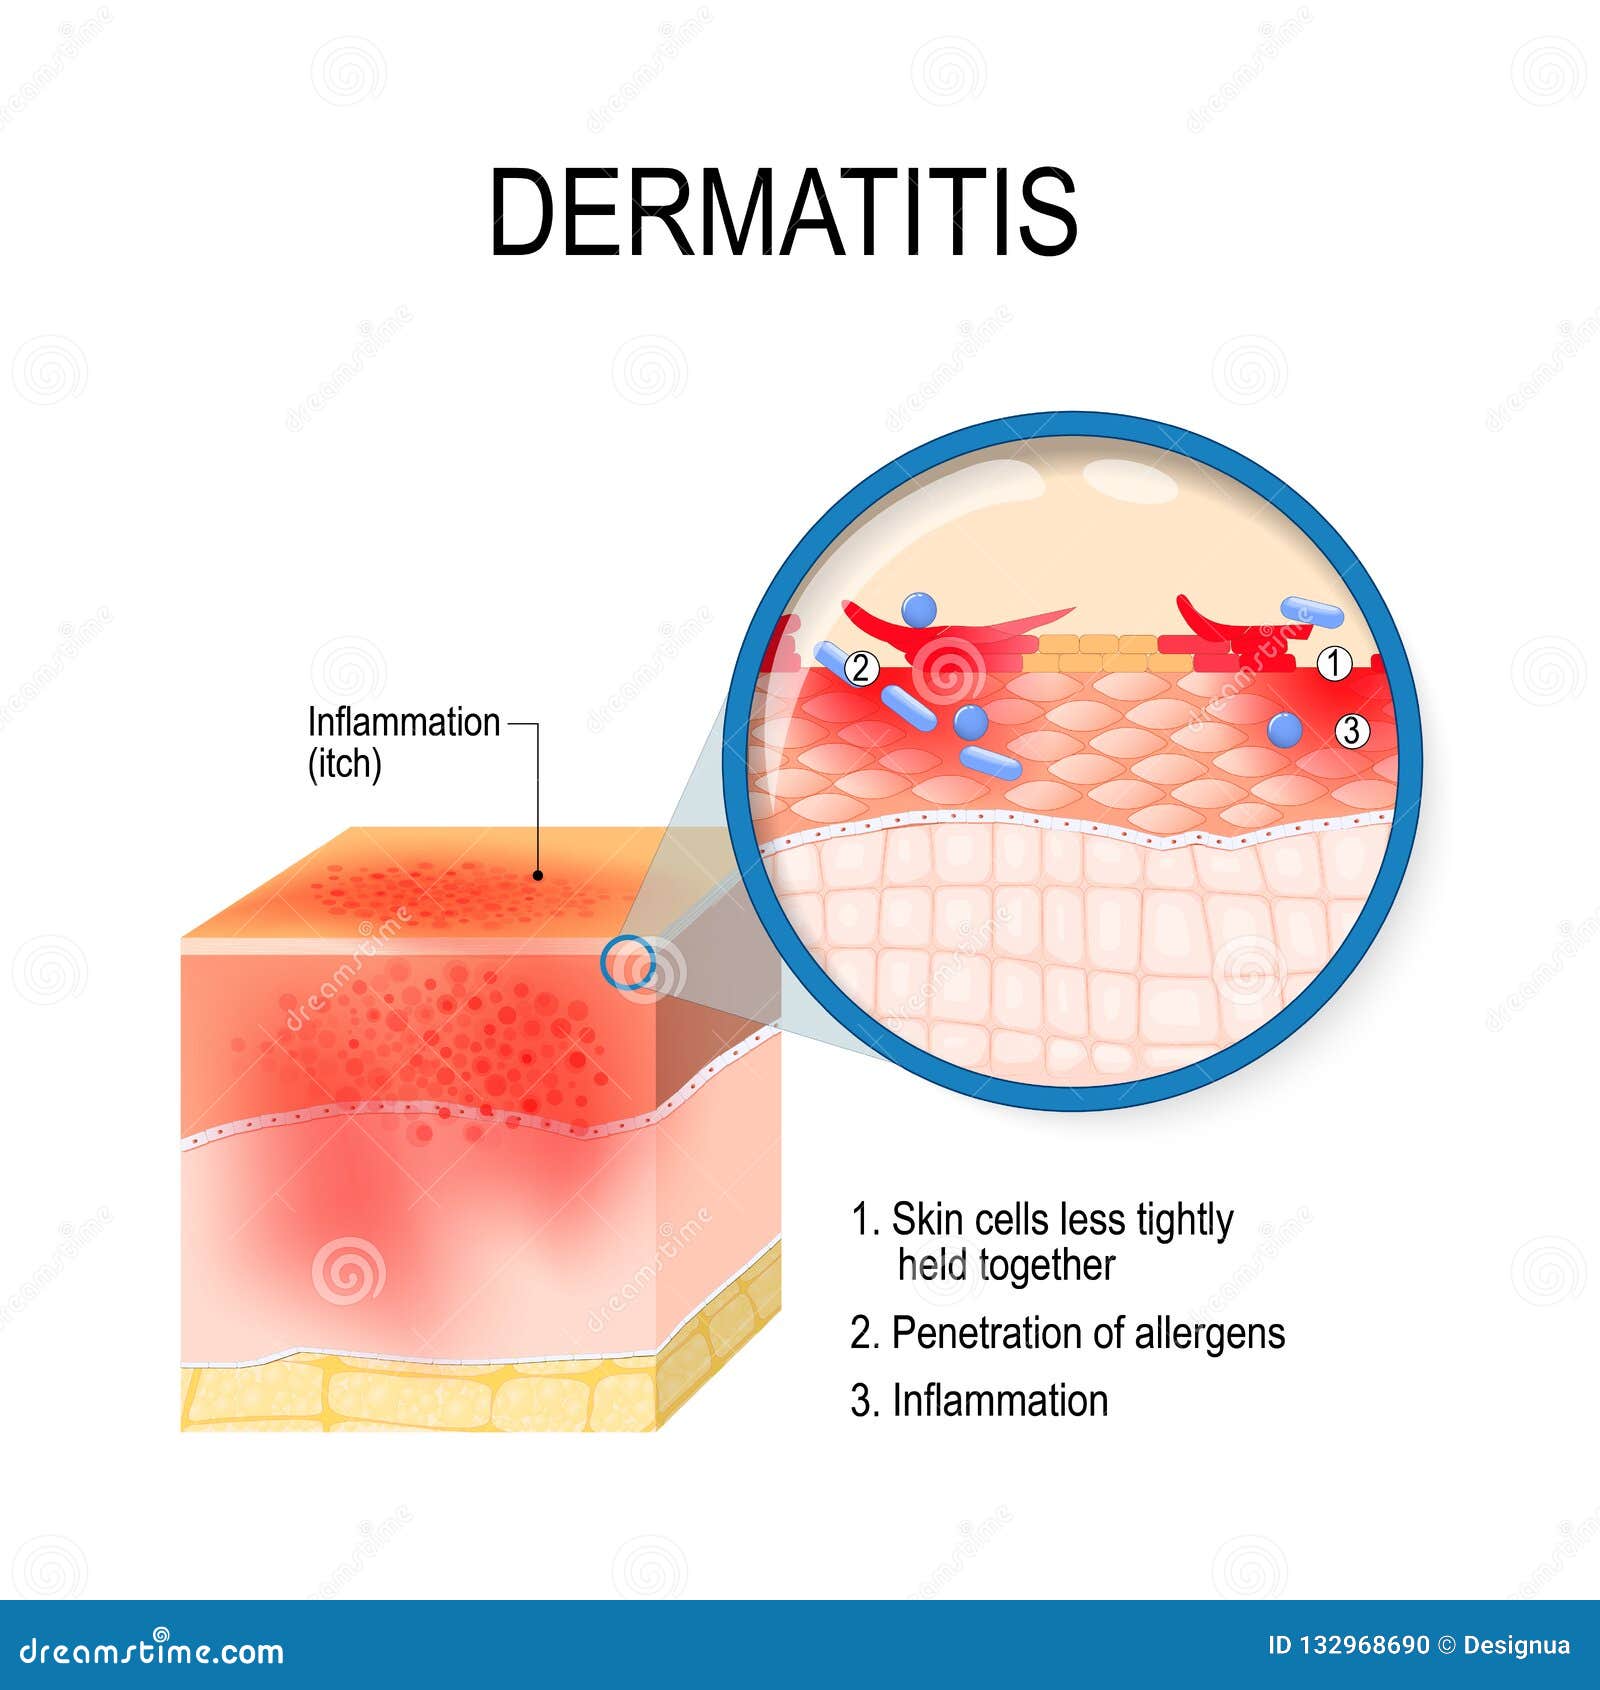 atopic dermatitis atopic eczema